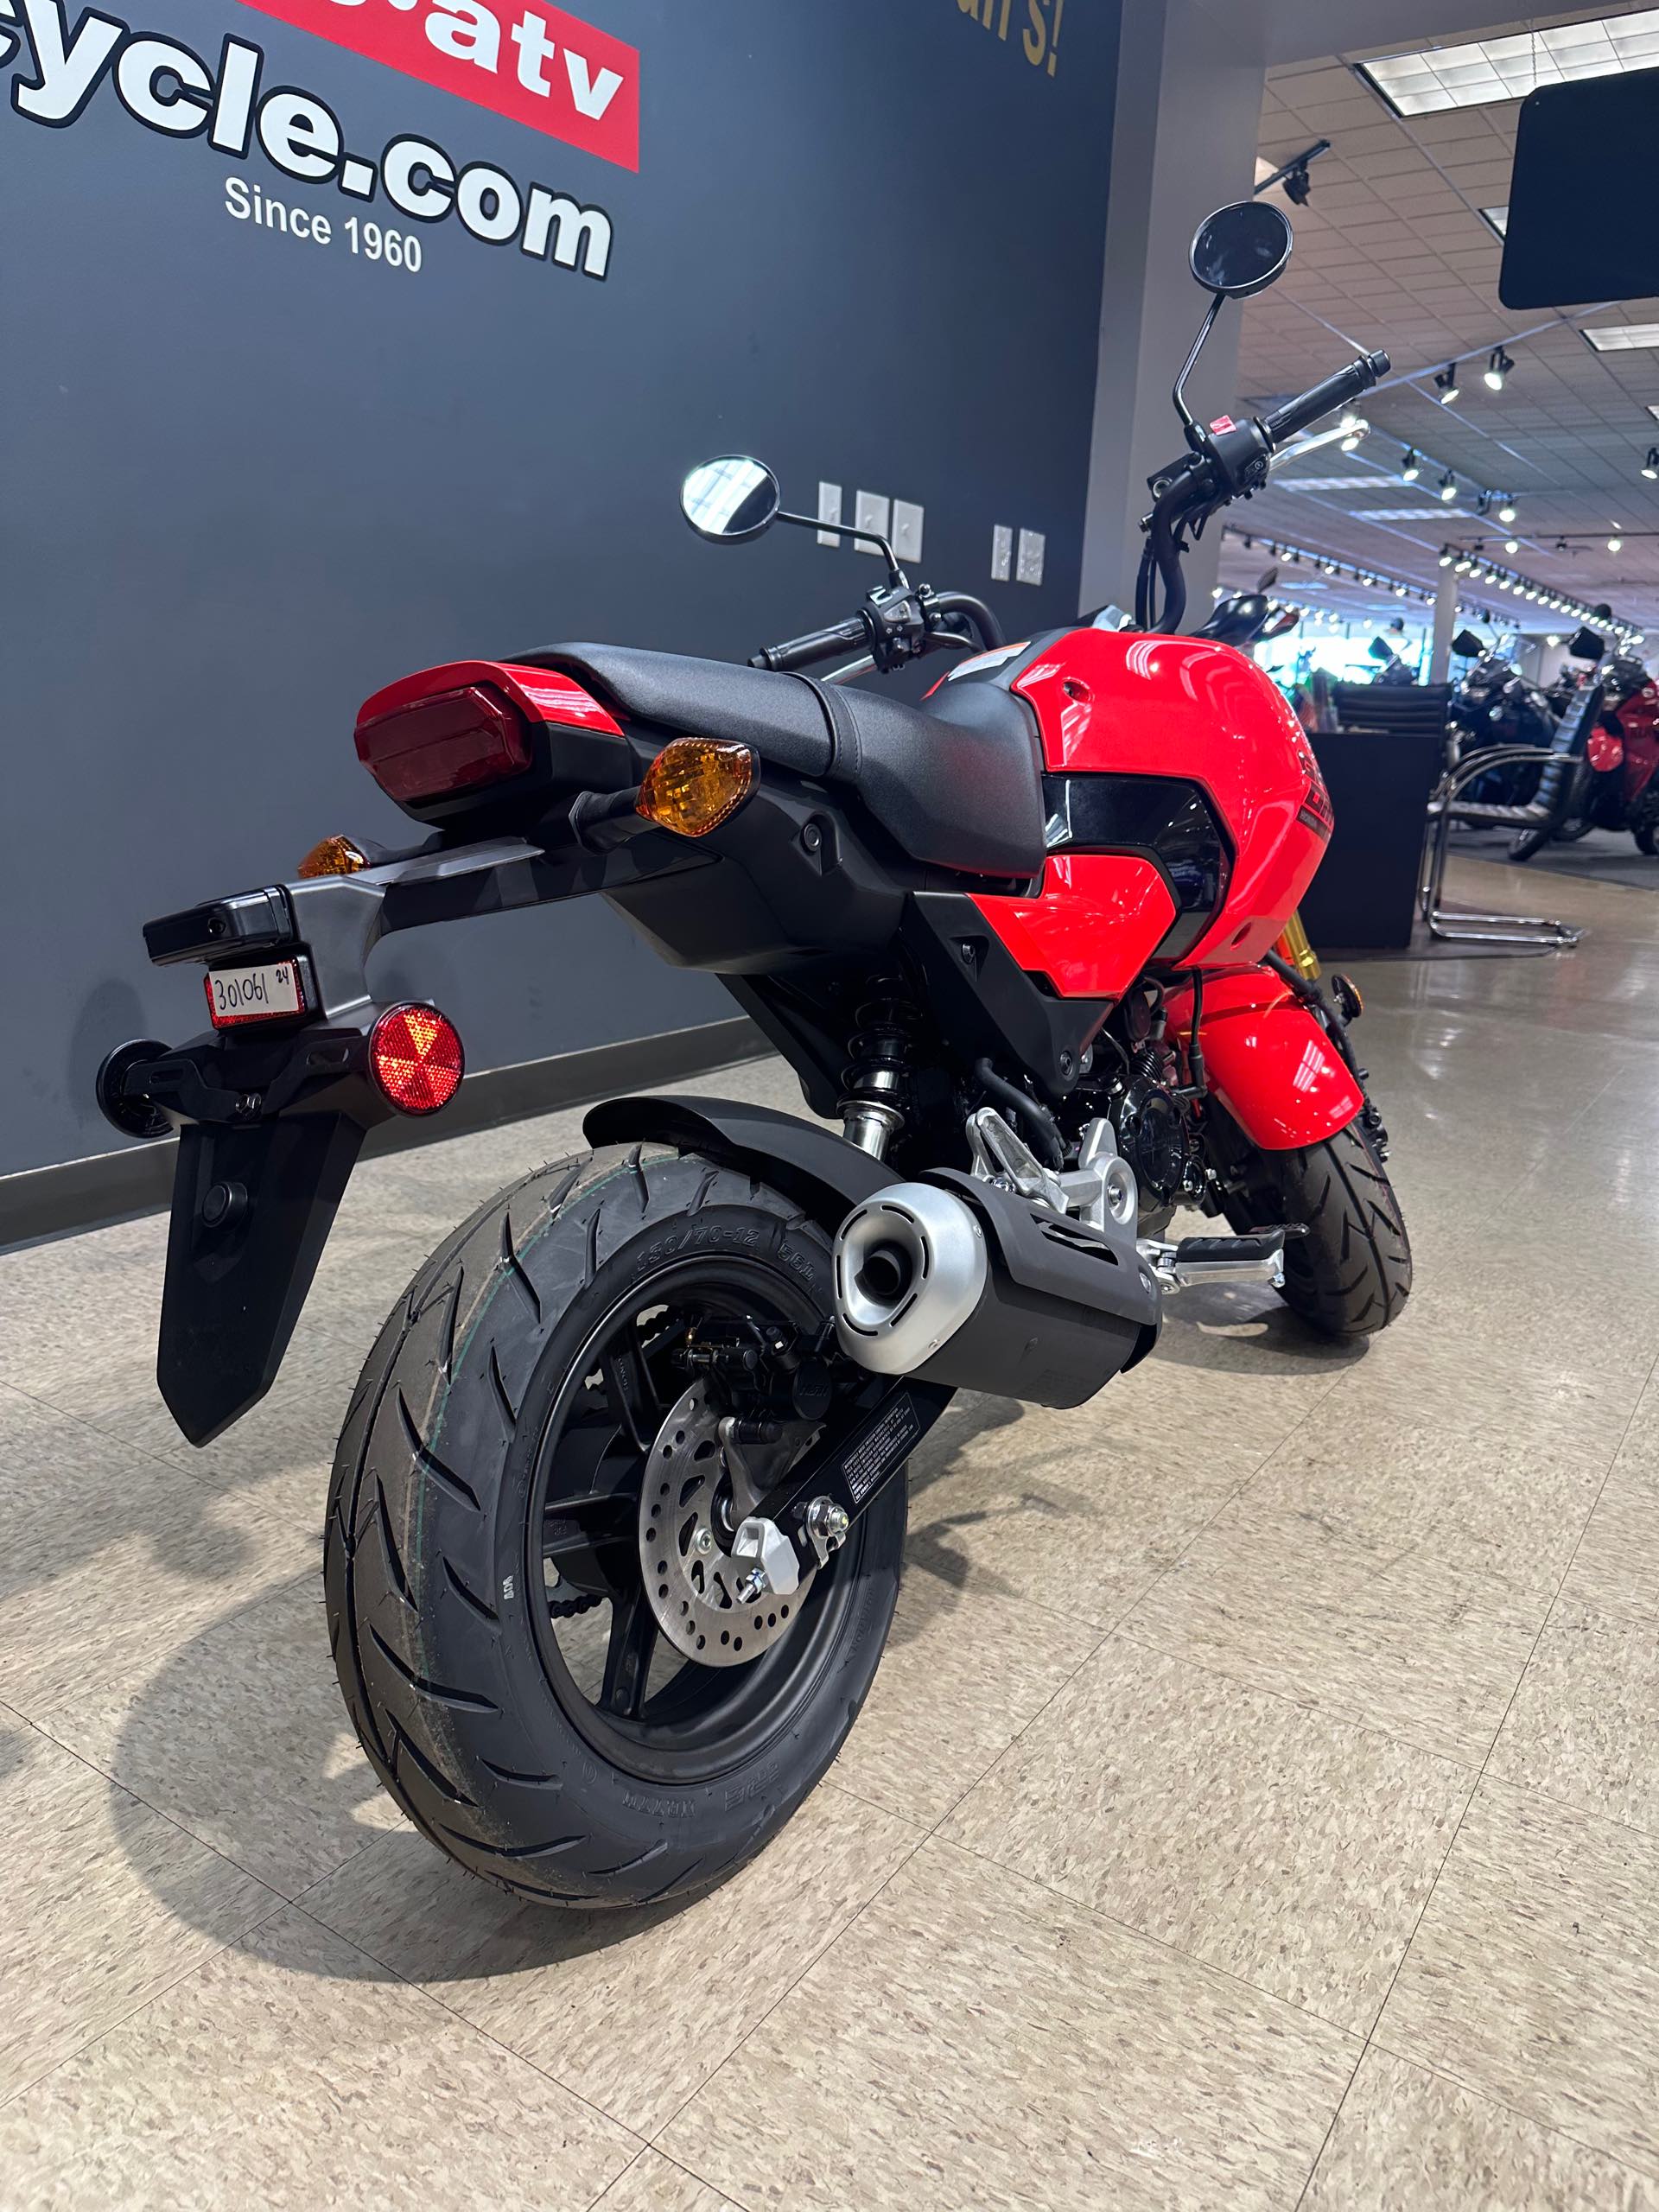 2025 Honda Grom Base at Sloans Motorcycle ATV, Murfreesboro, TN, 37129